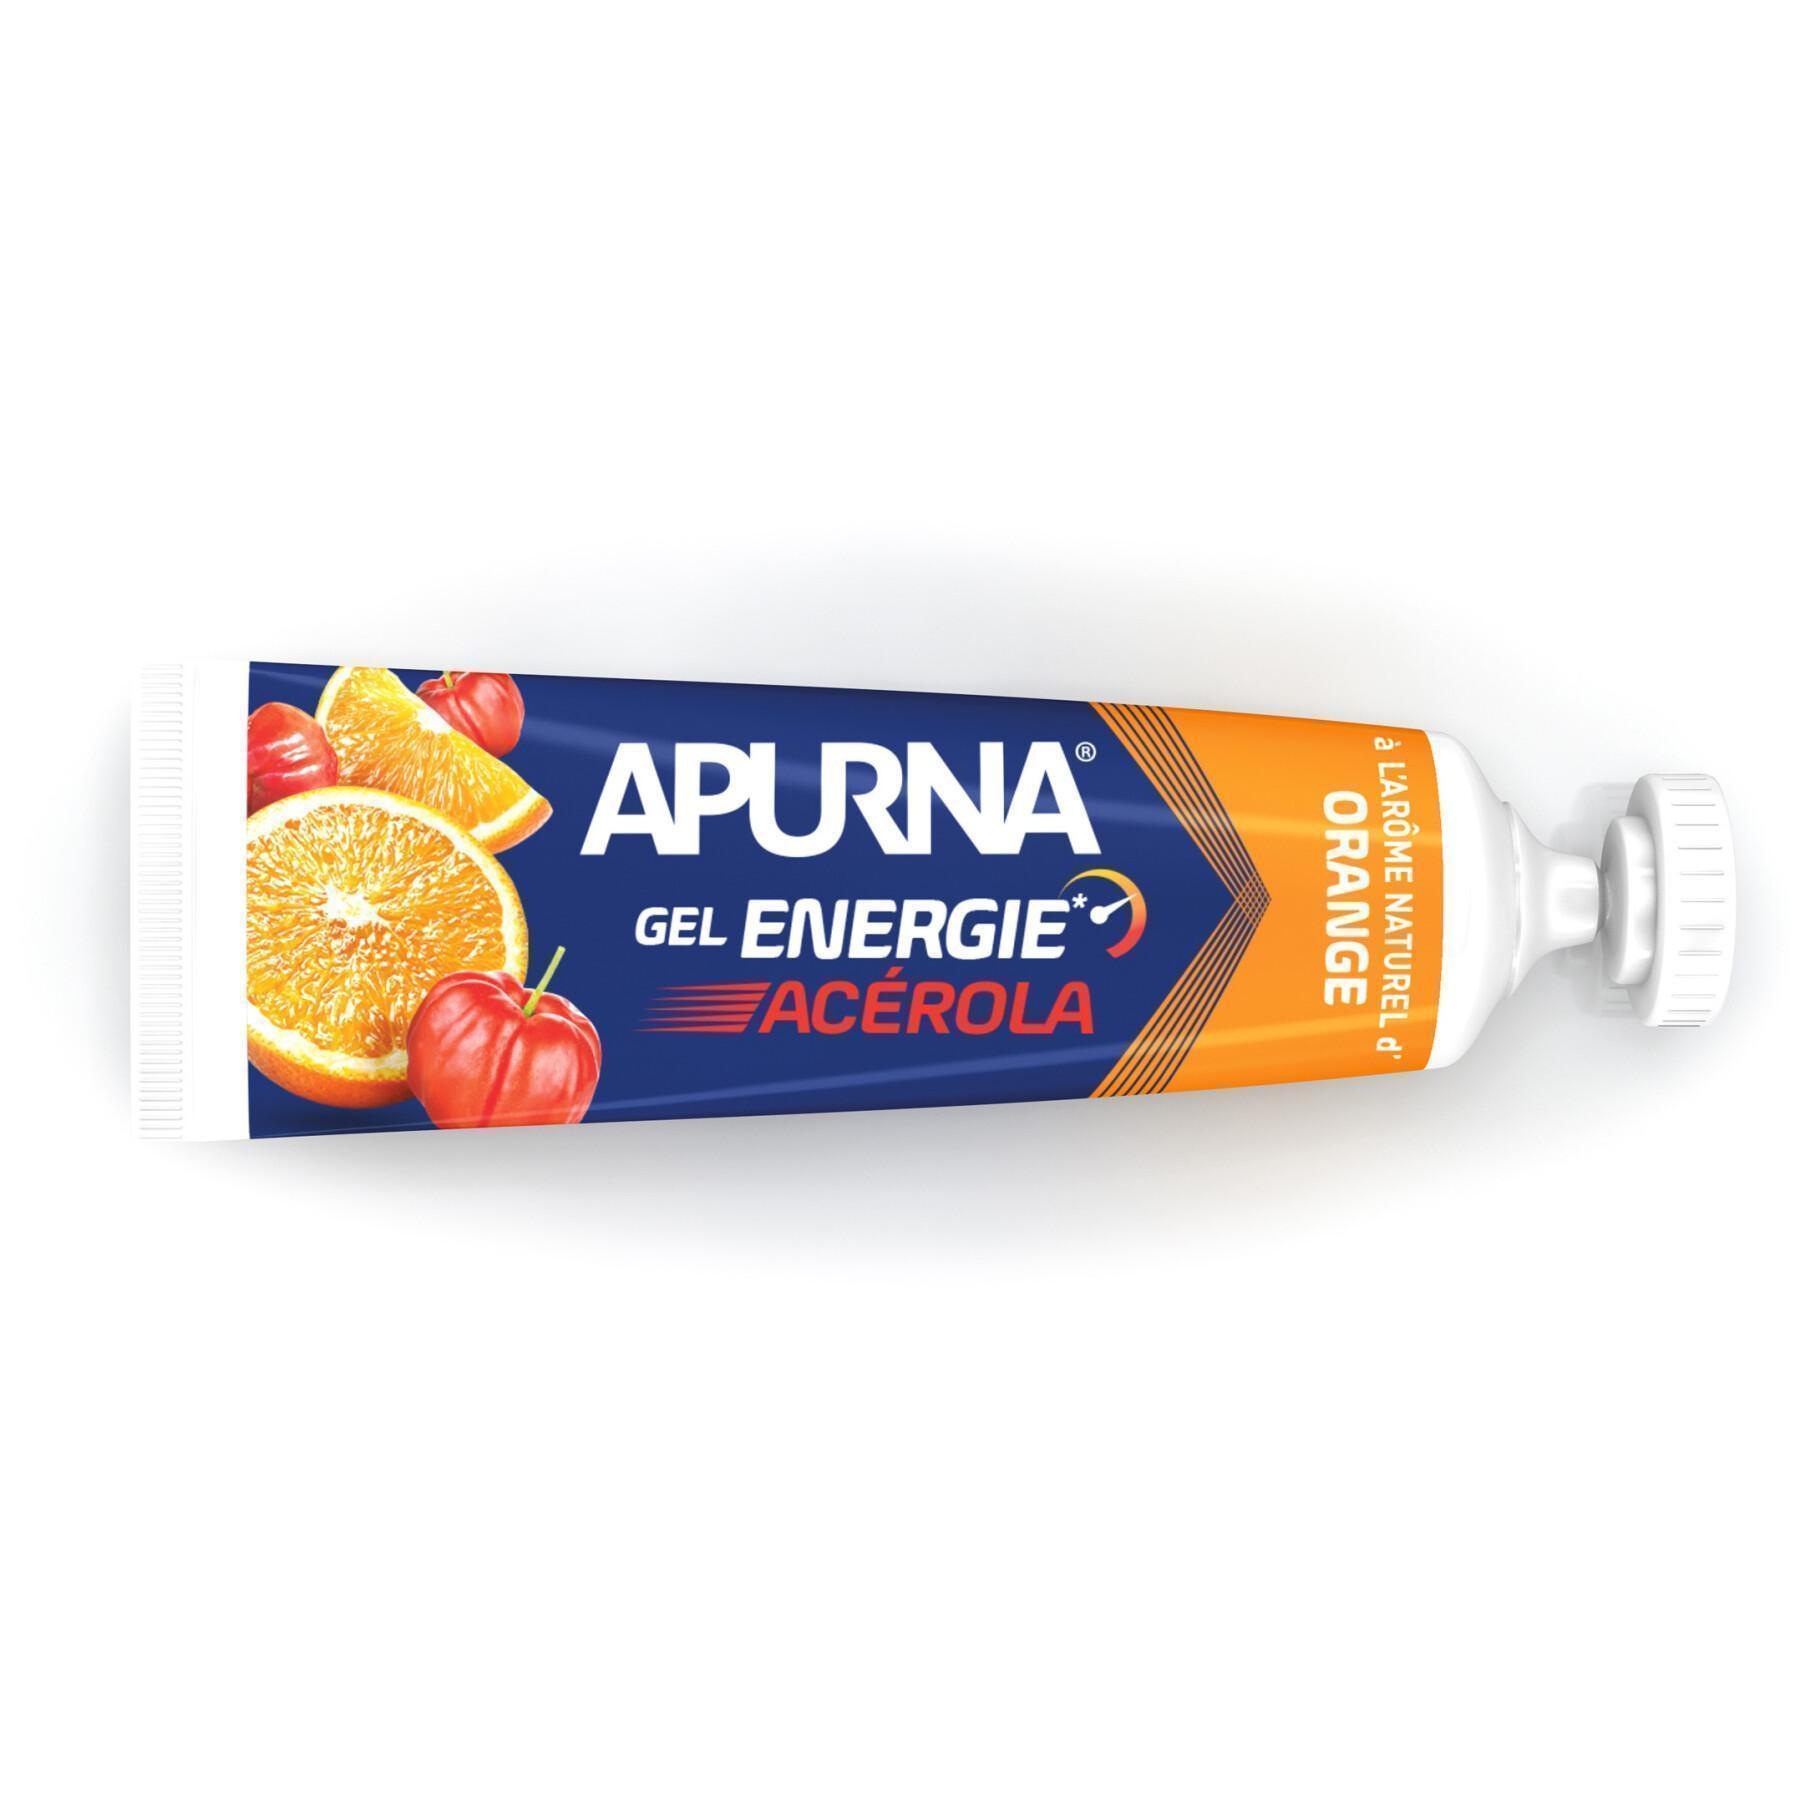 Confezione da 25 gel Apurna Energie acerola orange - 35g